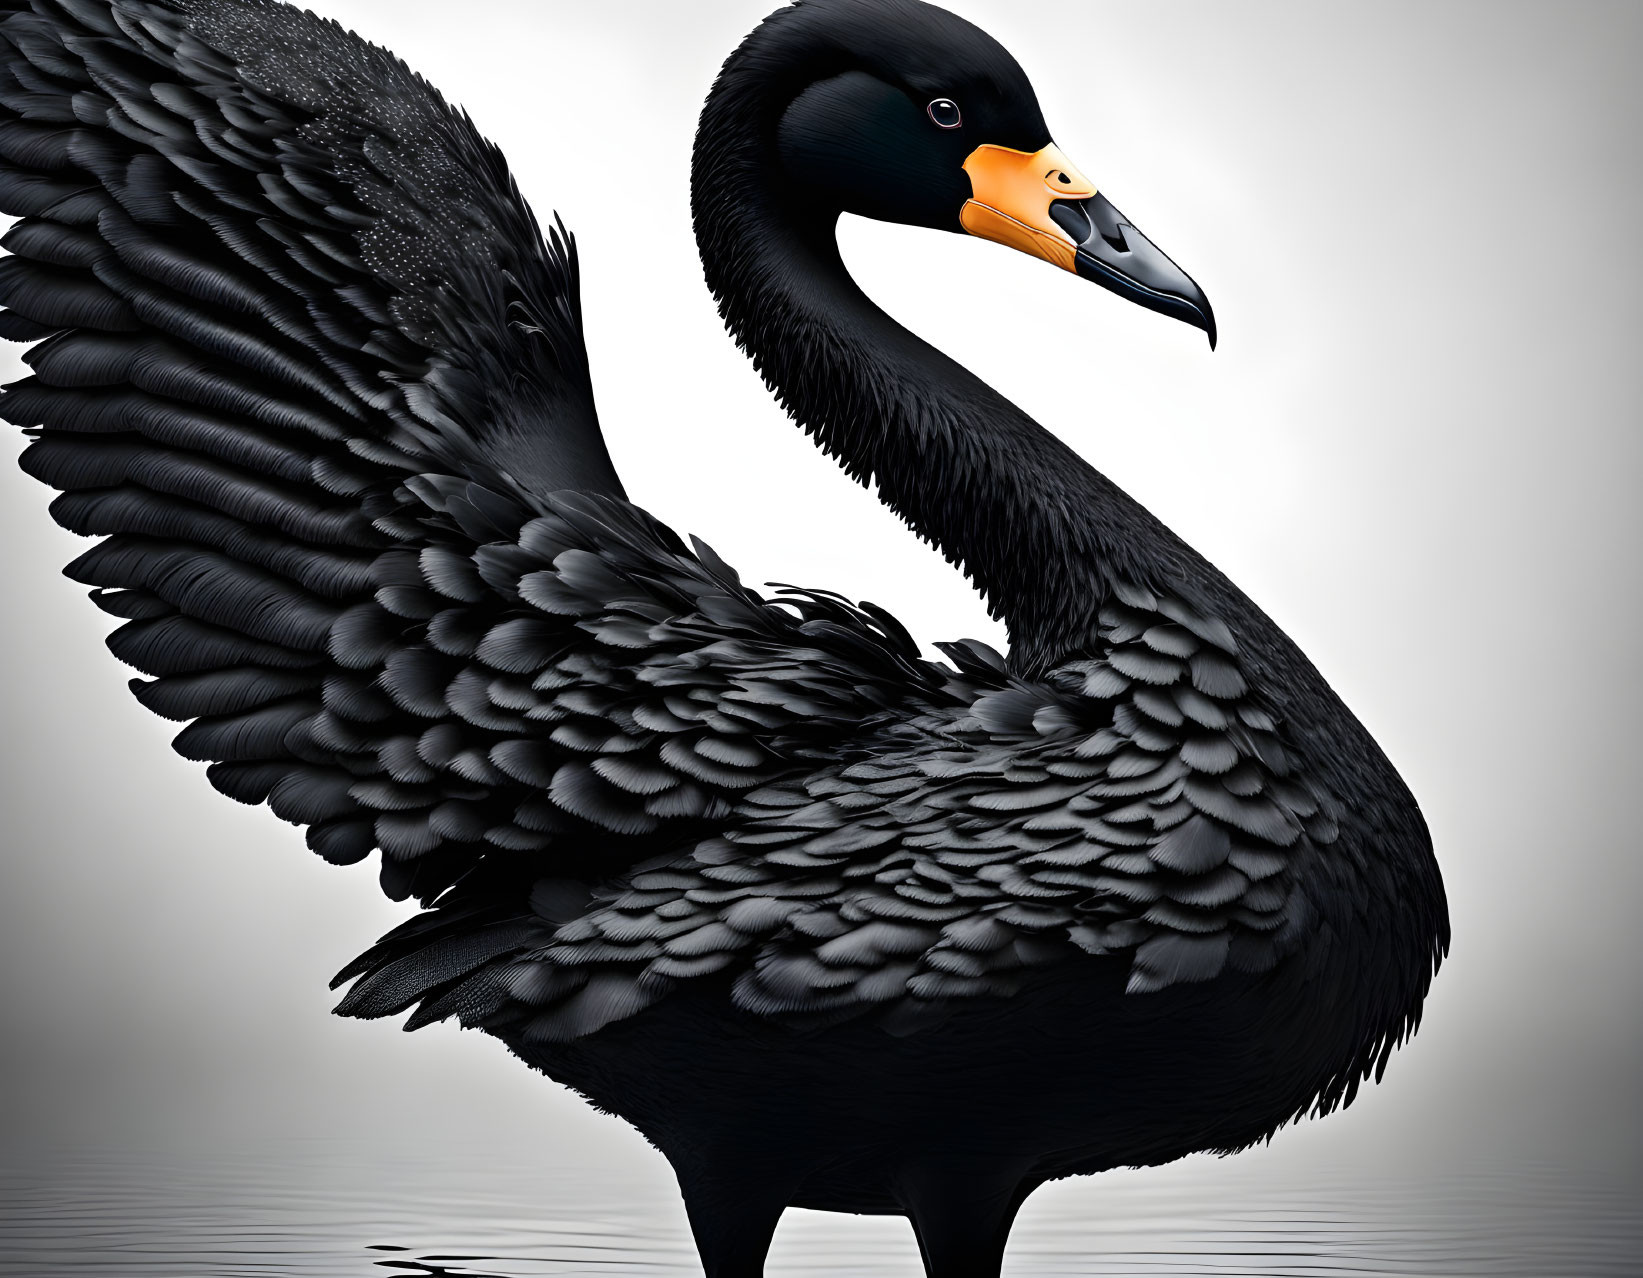 Detailed Black Swan with Striking Orange Beak and Feathers